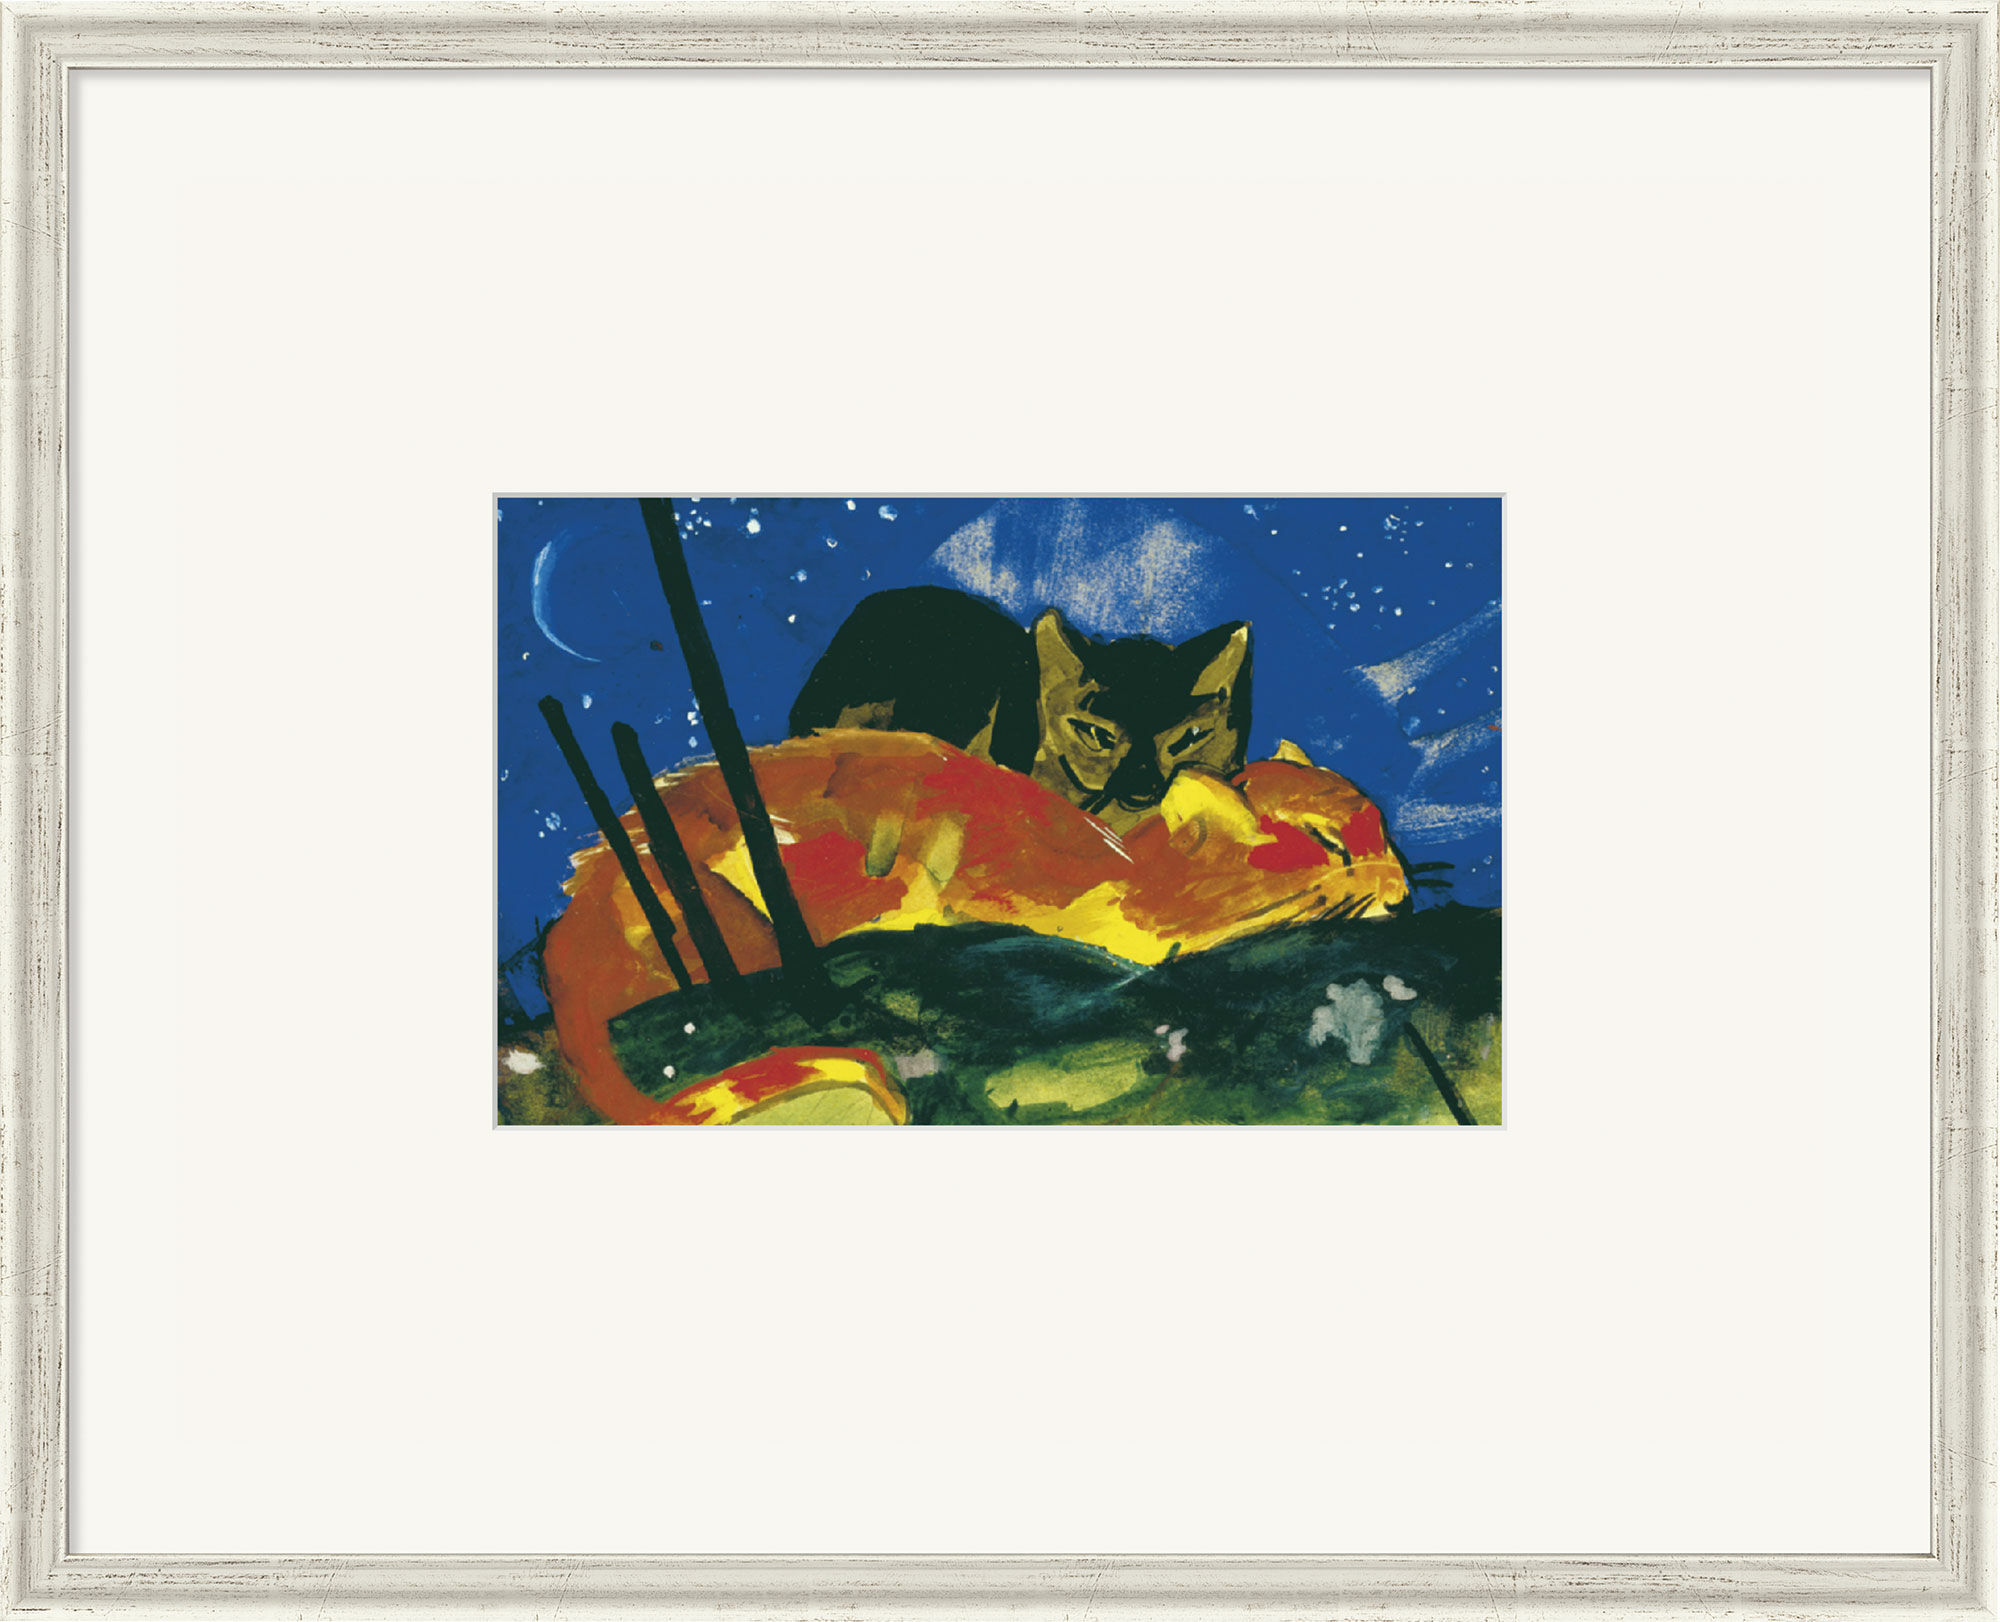 Beeld "Twee katten" (1913), ingelijst von Franz Marc